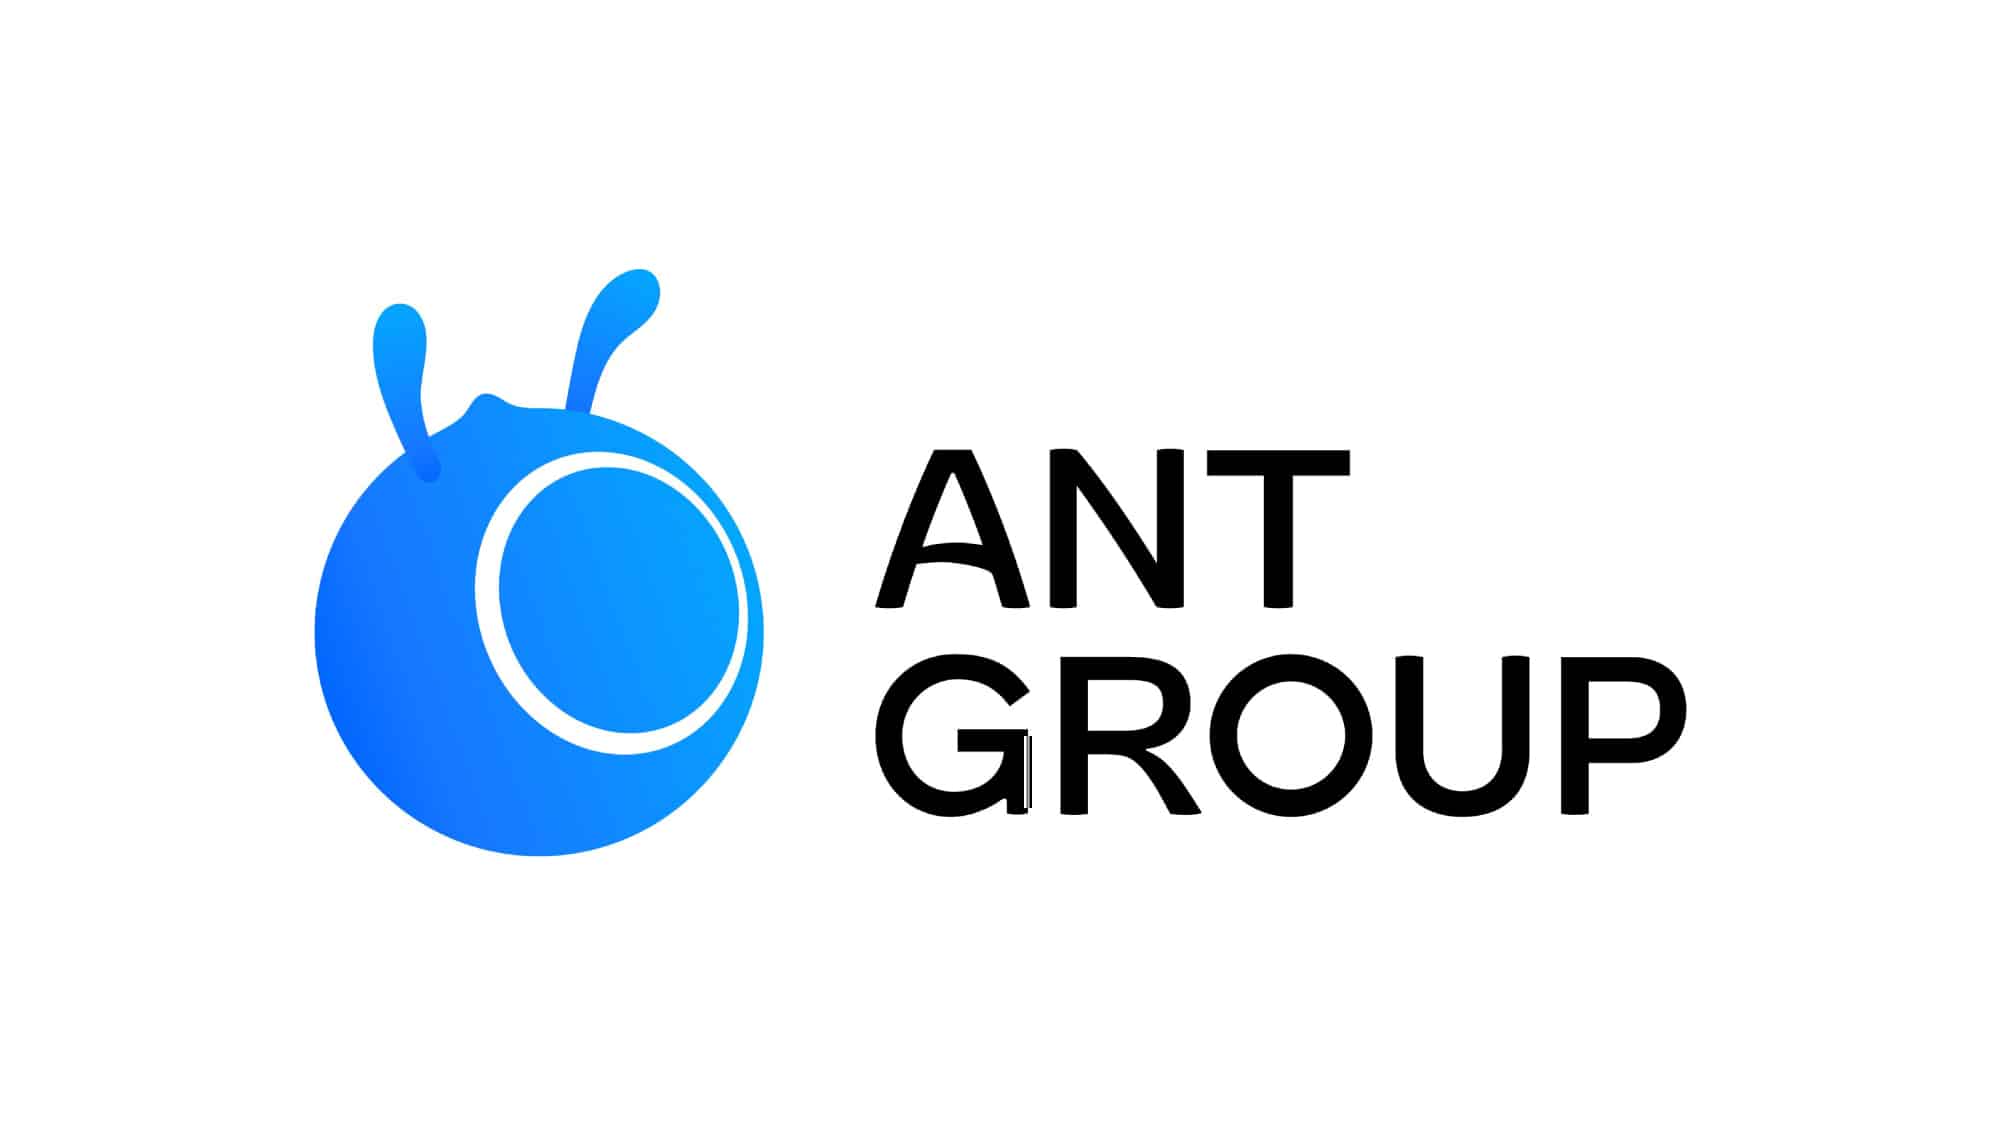 Le logo d'Ant Group